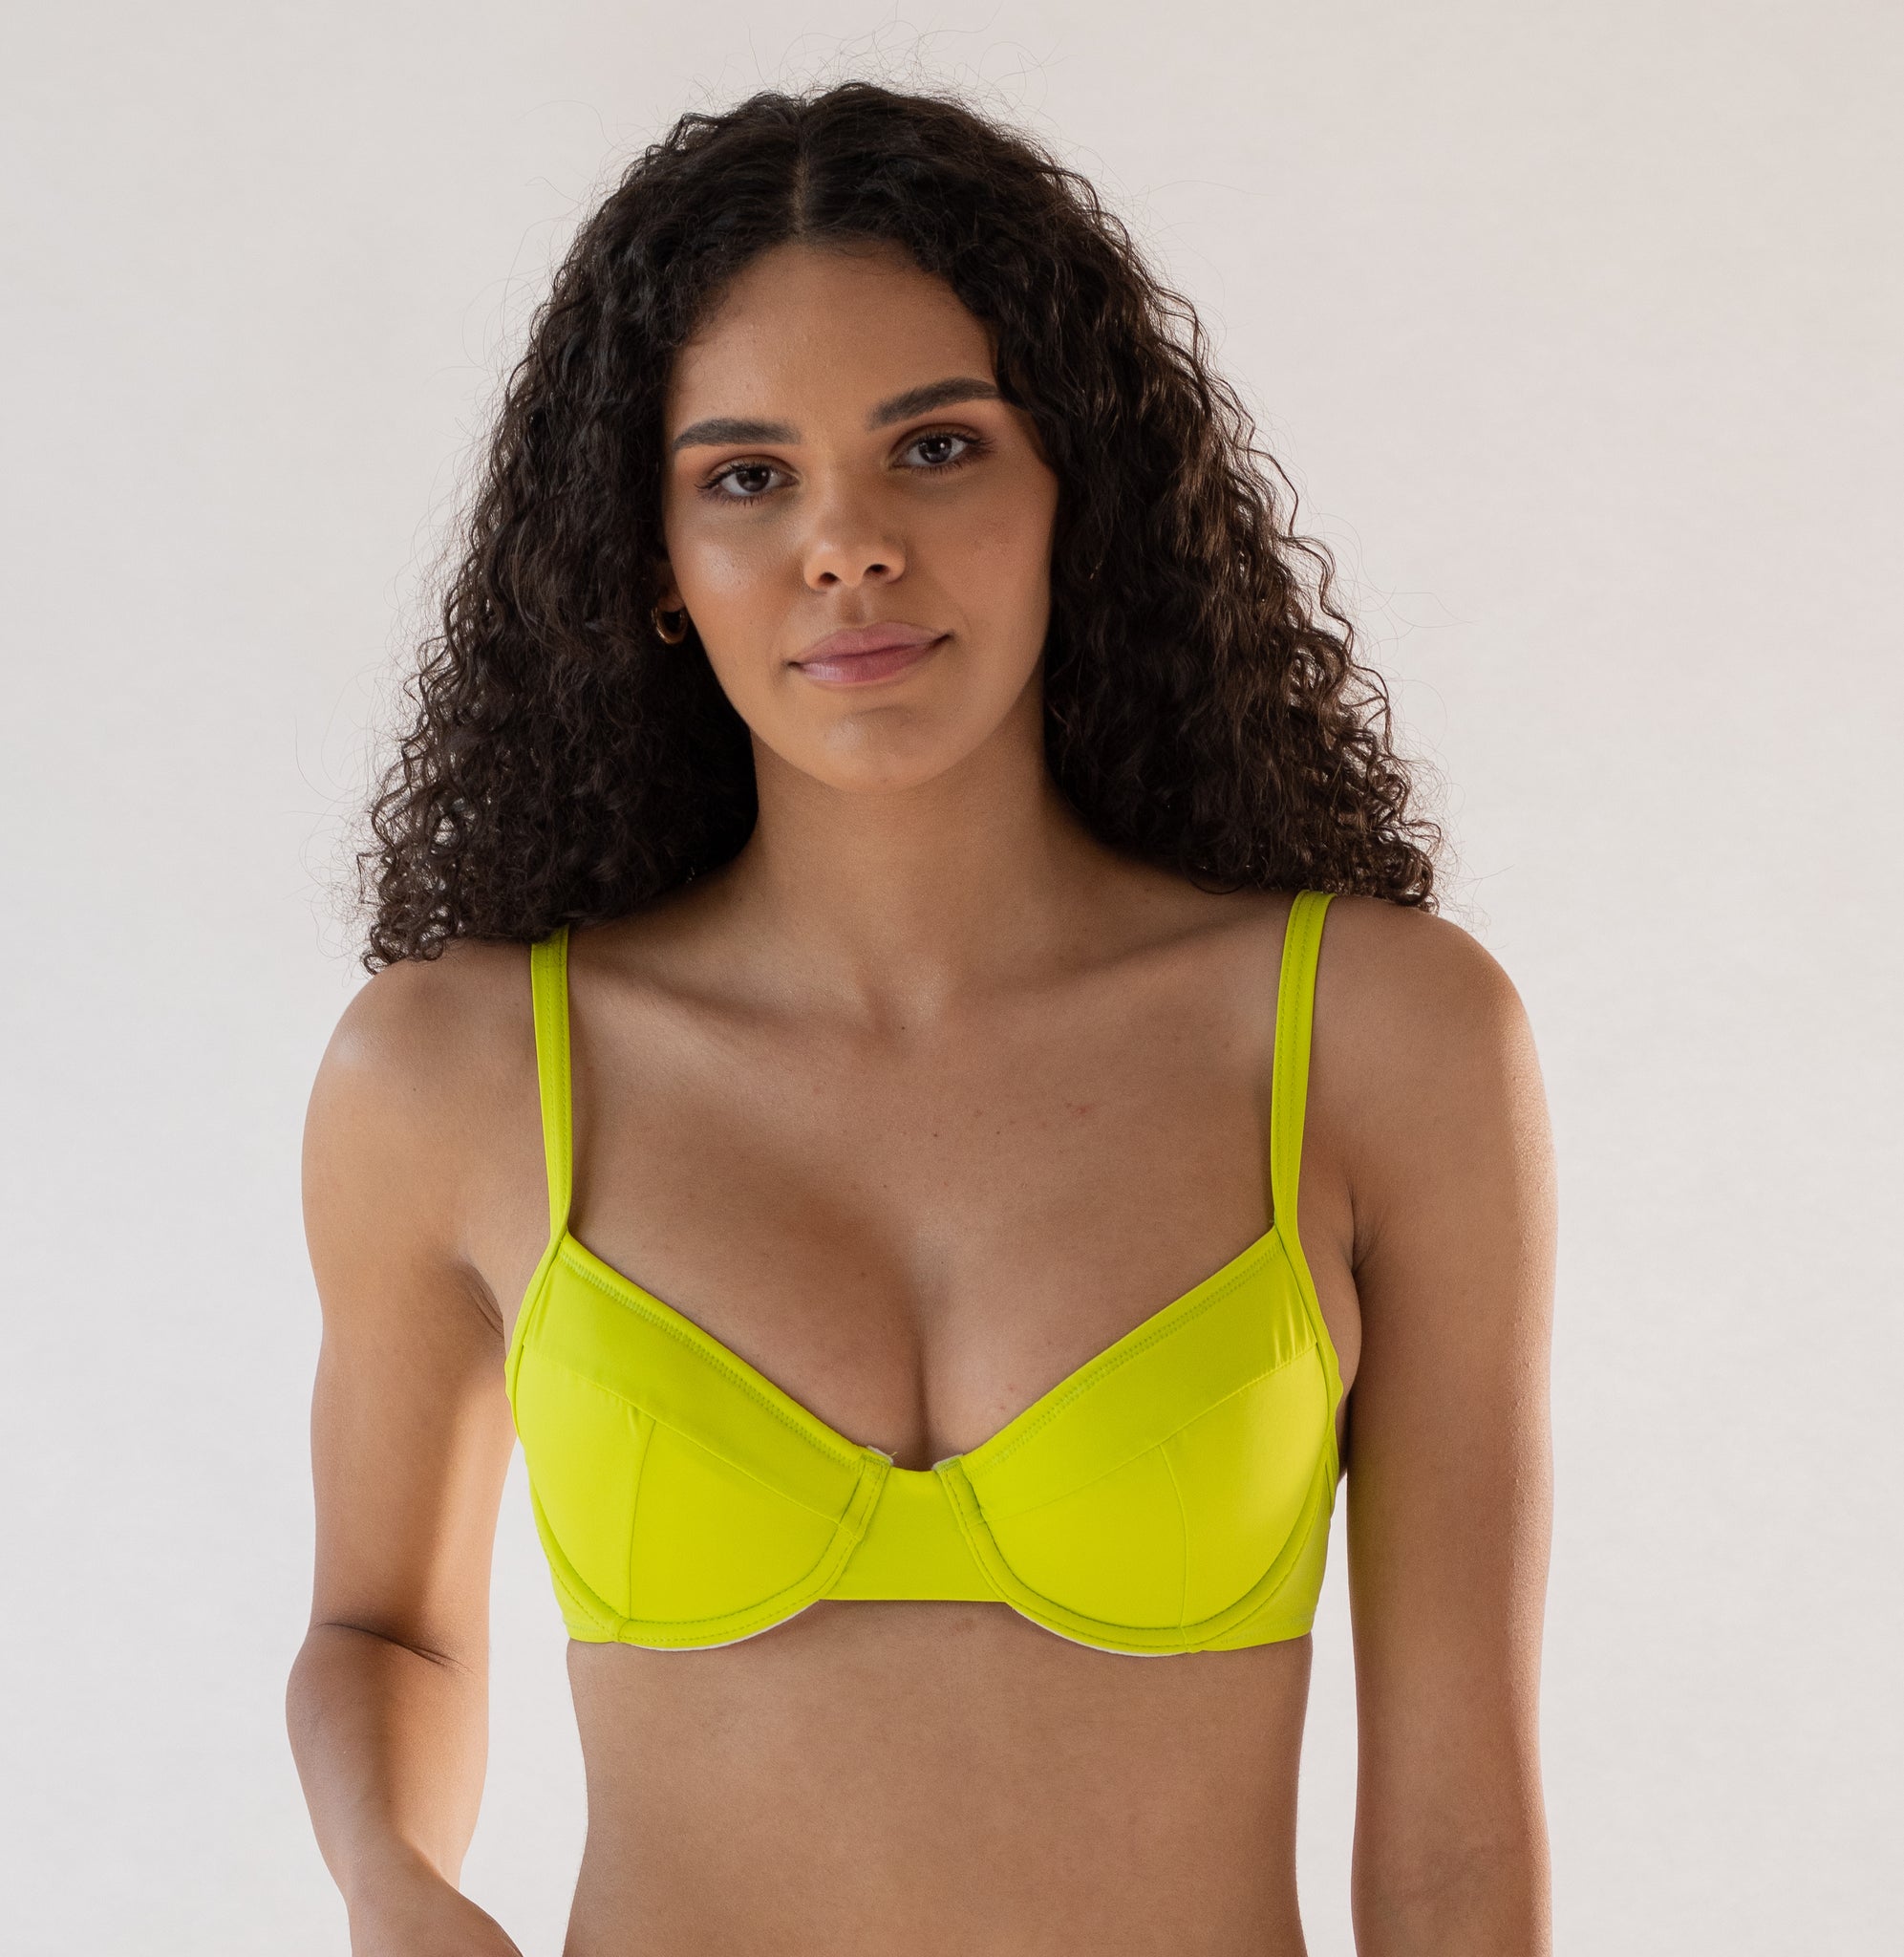 Cosmos underwire bikini top in Lime